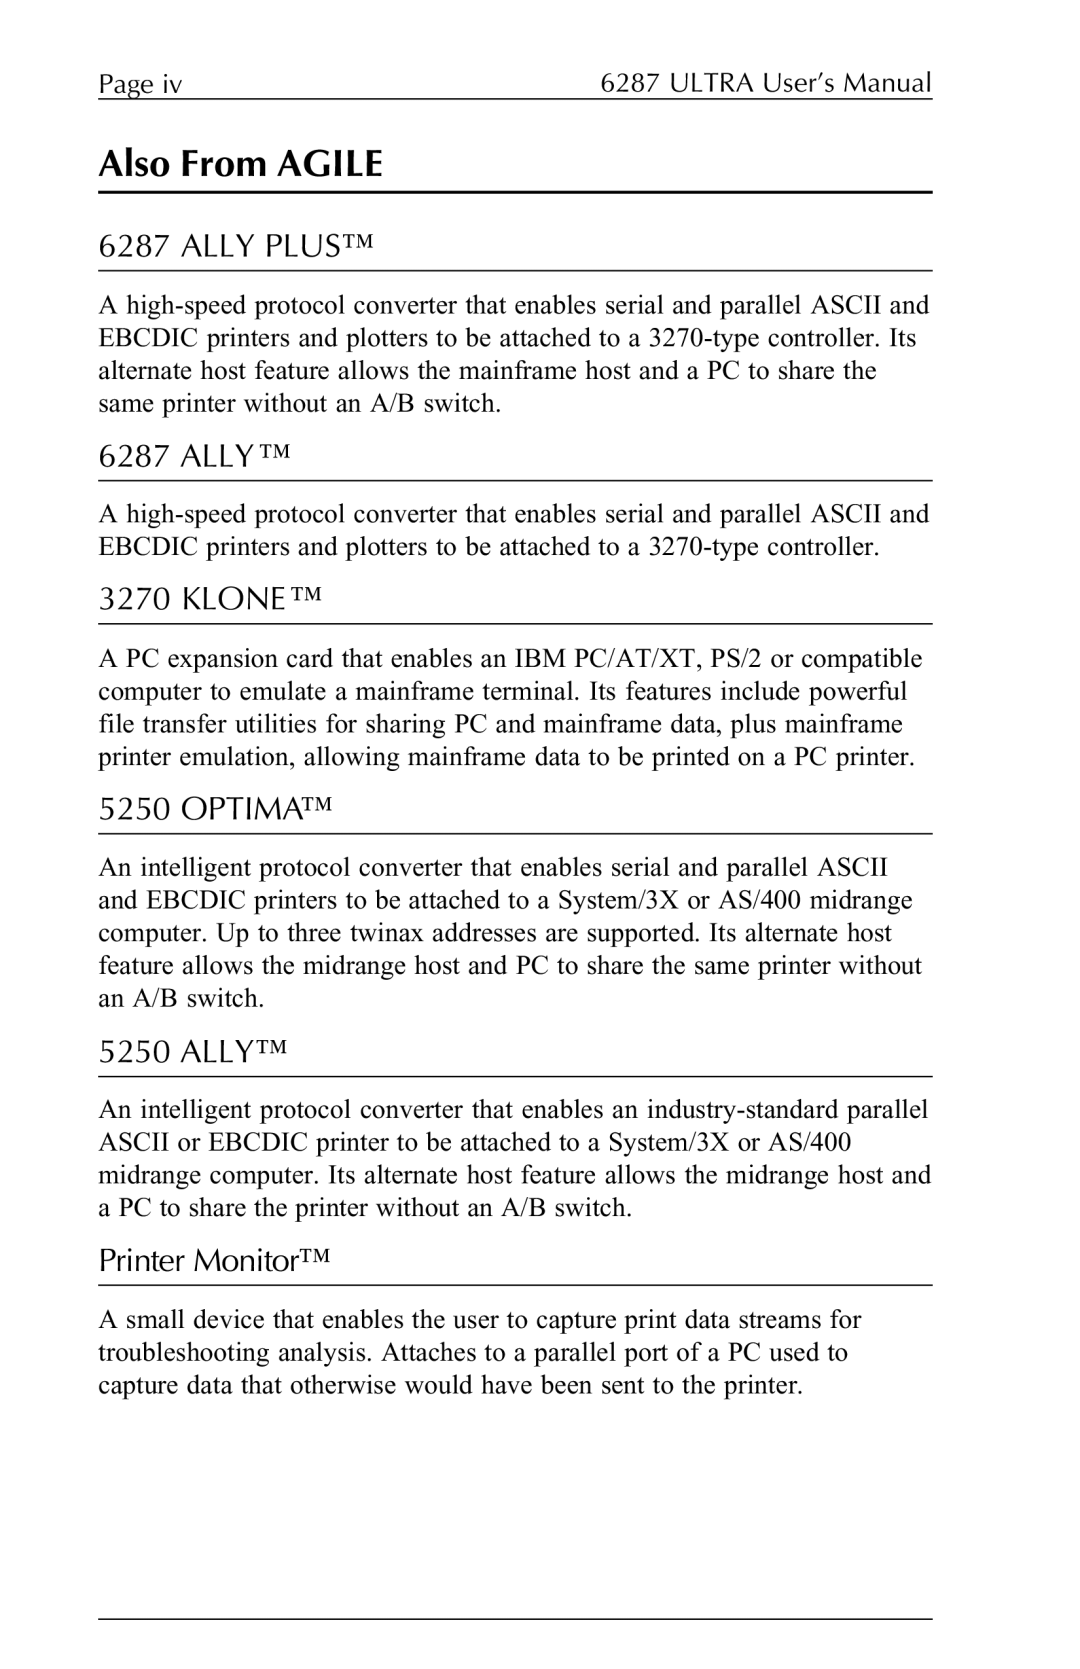 Agilent Technologies 6287 manual Also From Agile, Ally, Klone, Optima, Printer Monitor 